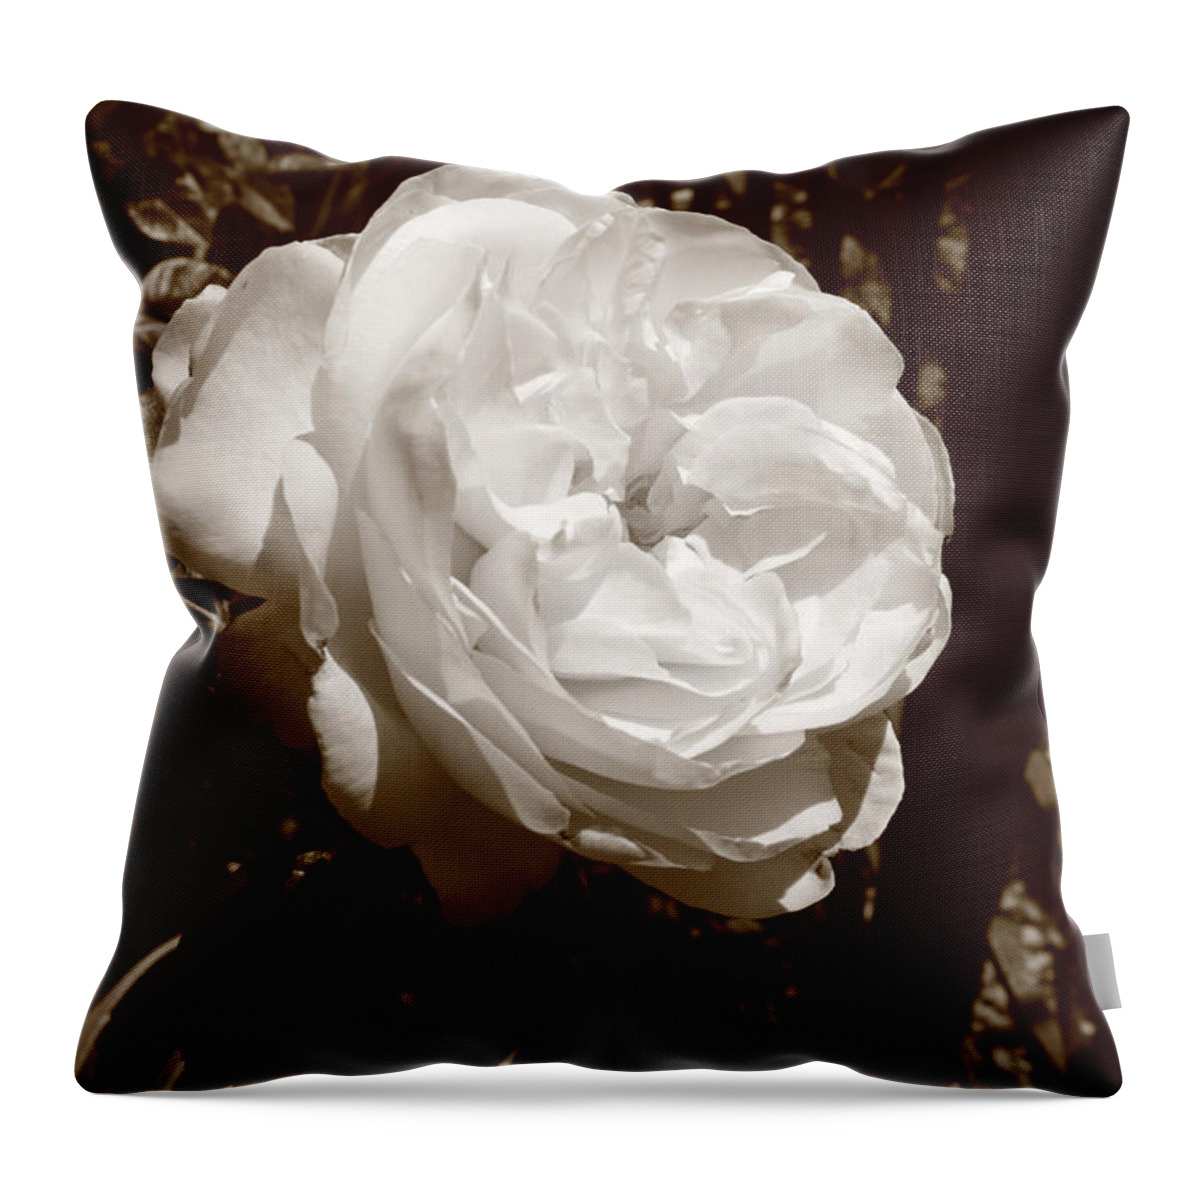  Rose Throw Pillow featuring the photograph Sepia Rose by Aidan Moran